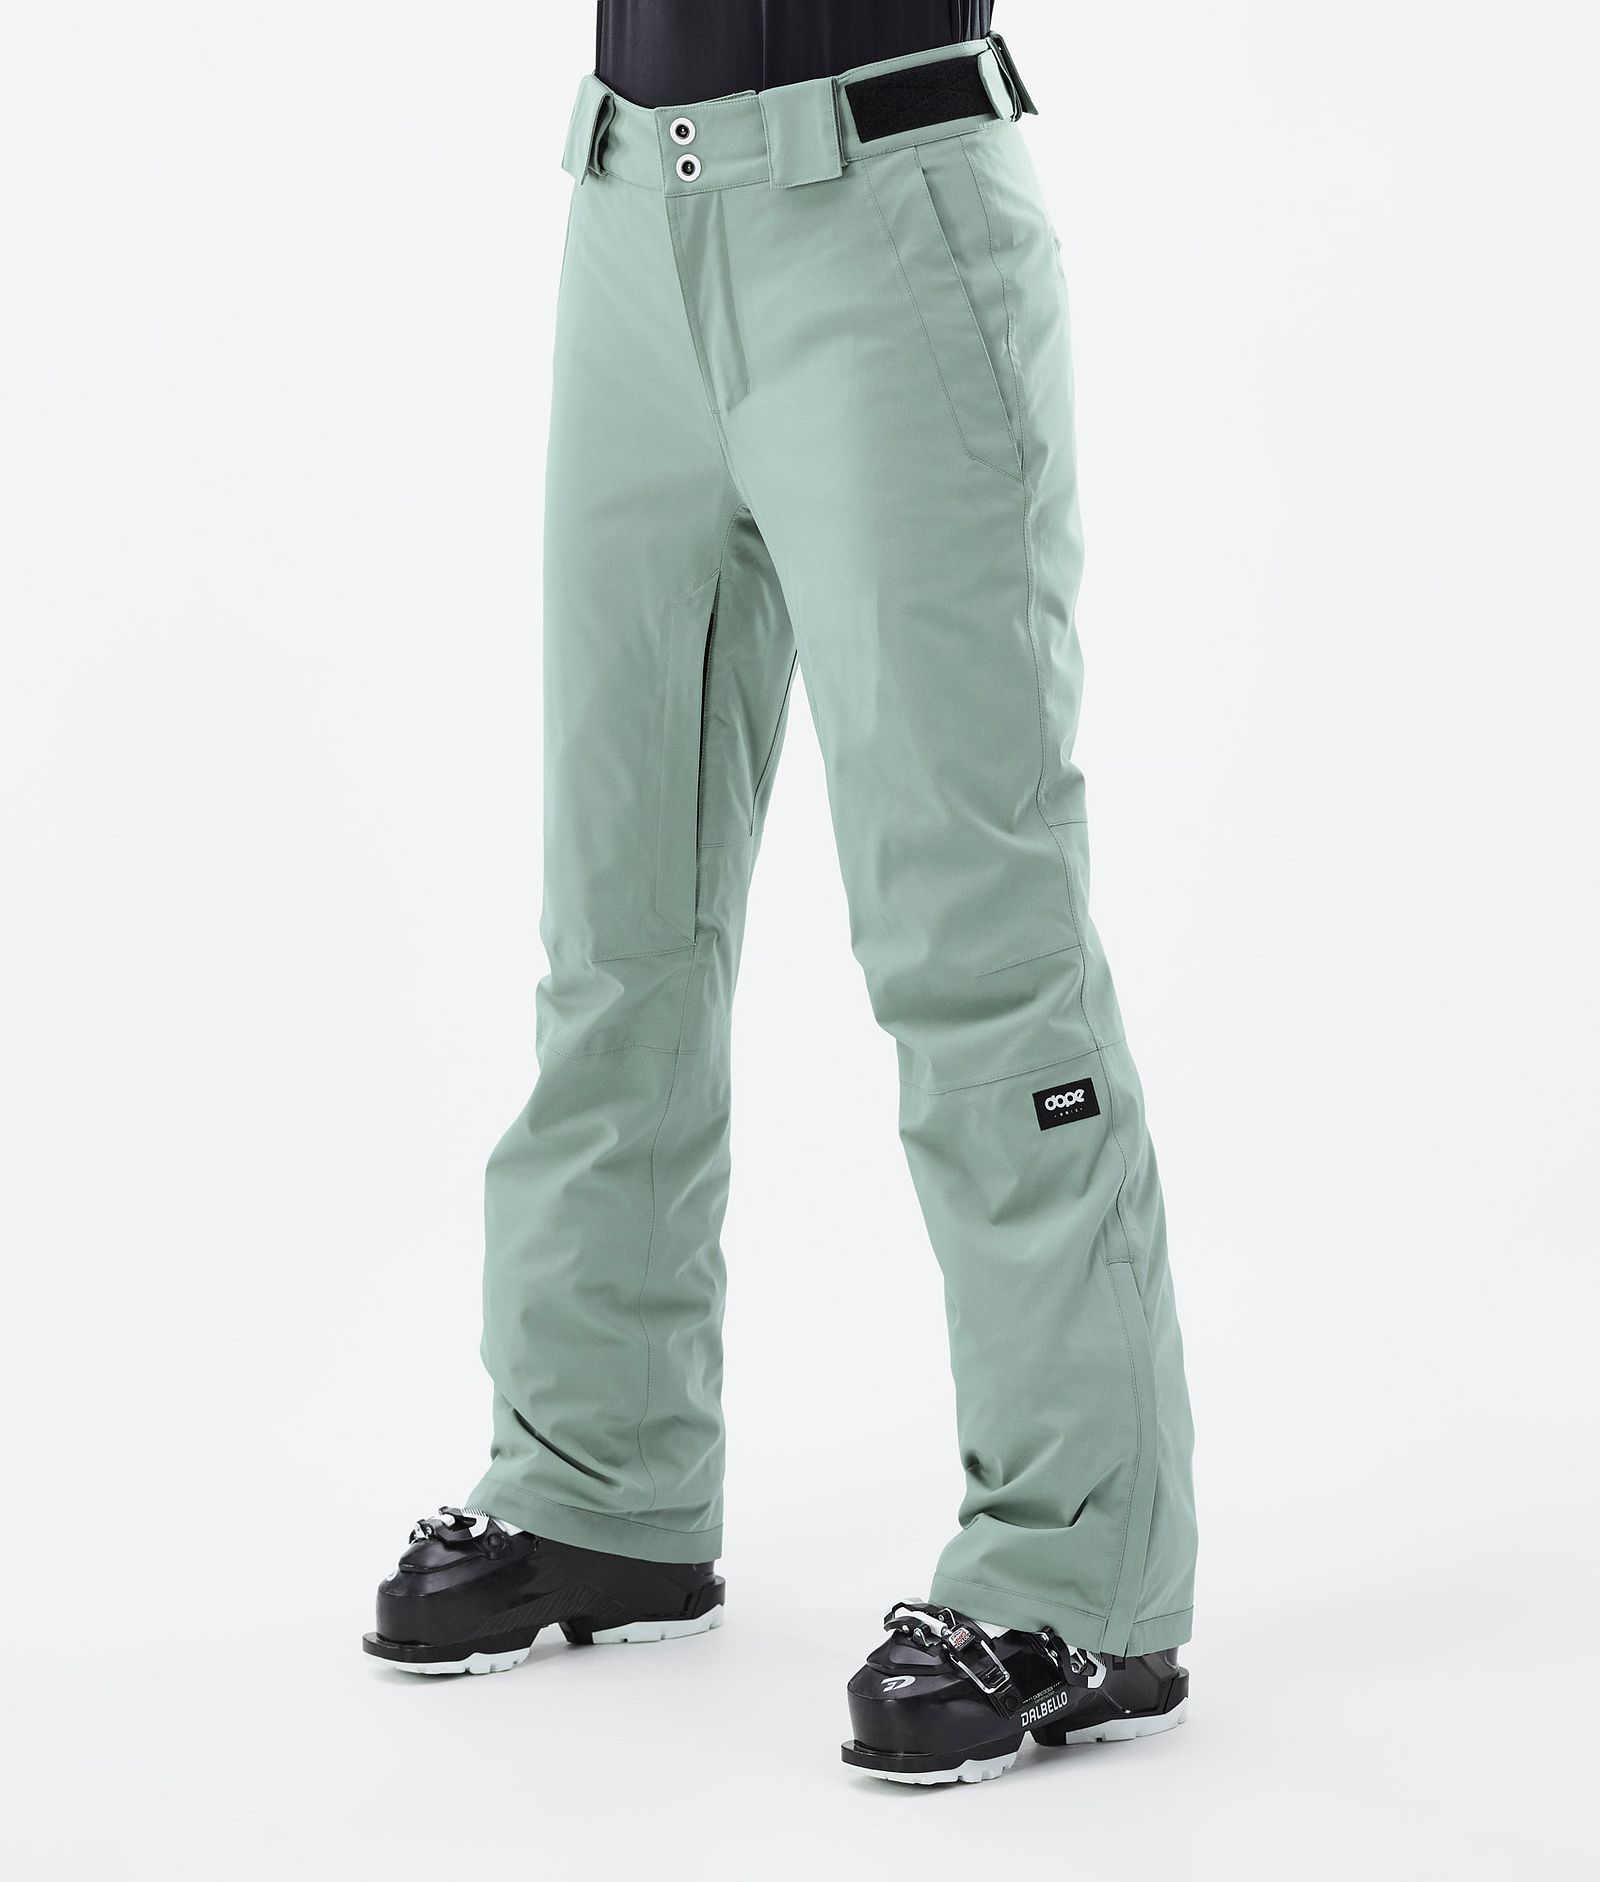 Con W 2022 Pantalon de Ski Femme Faded Green, Image 1 sur 5